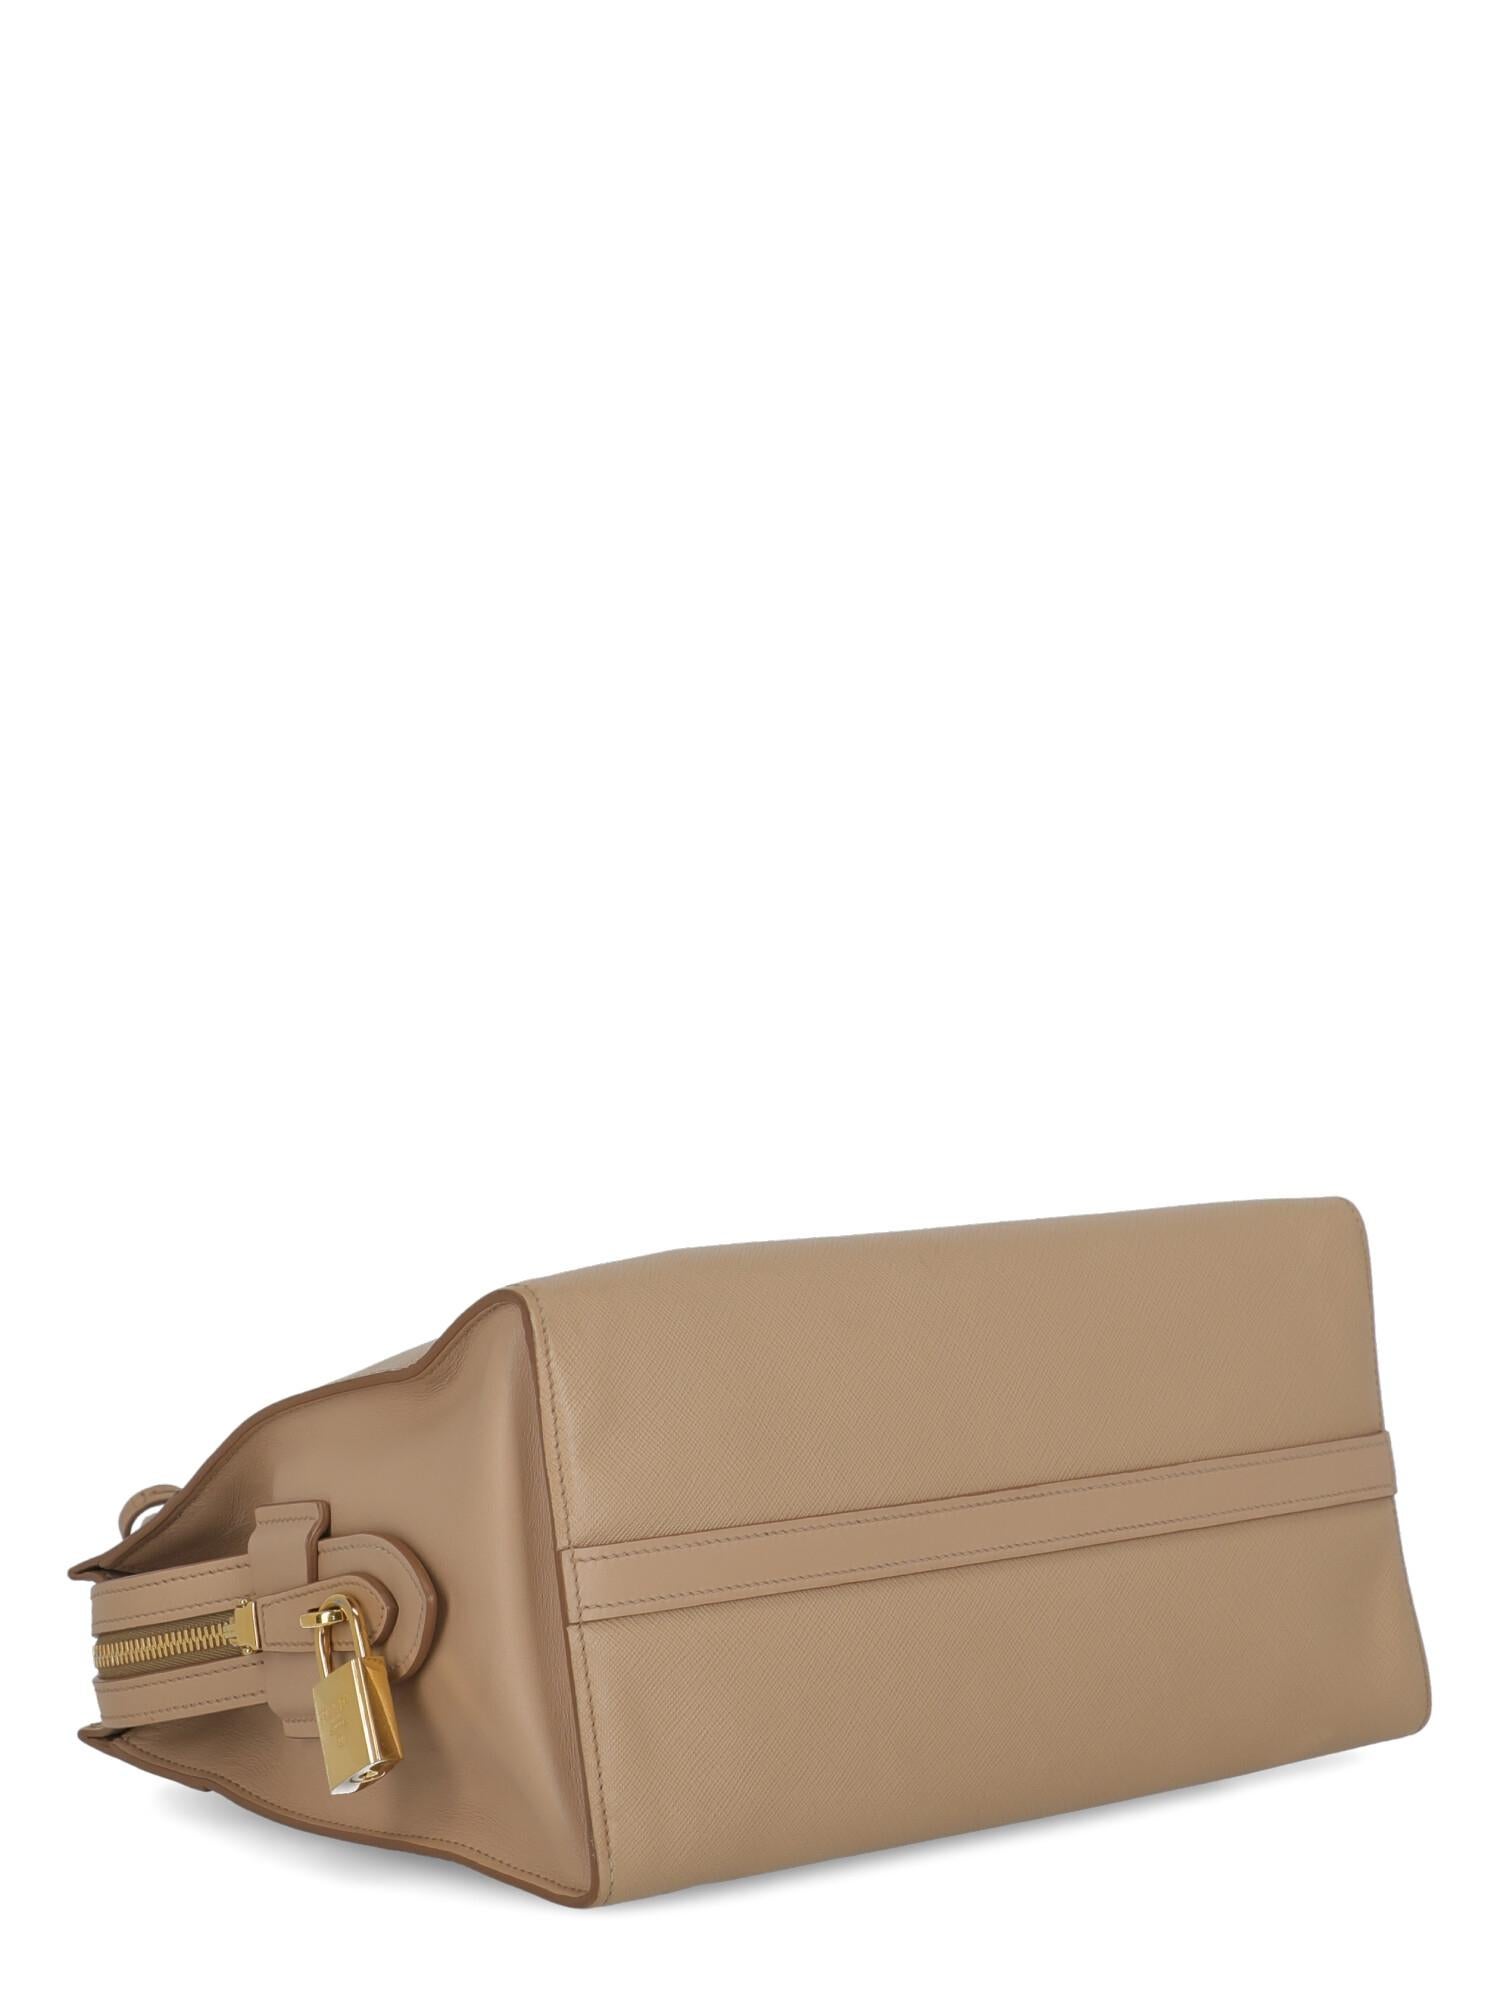 Prada Women's Handbag Esplanade Beige Leather For Sale 2